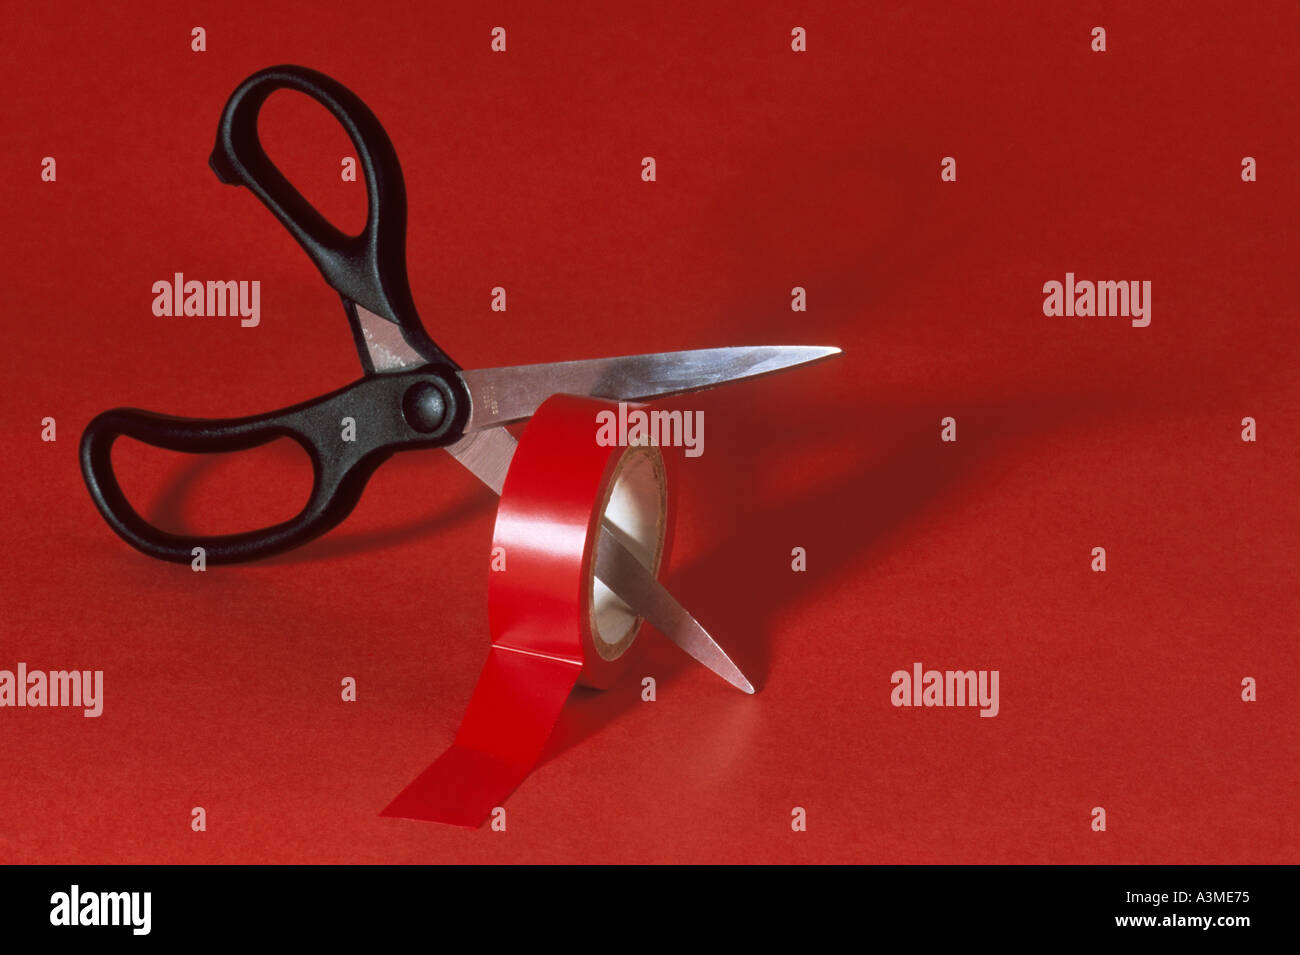 Scissors cutting through red tape Stock Photo